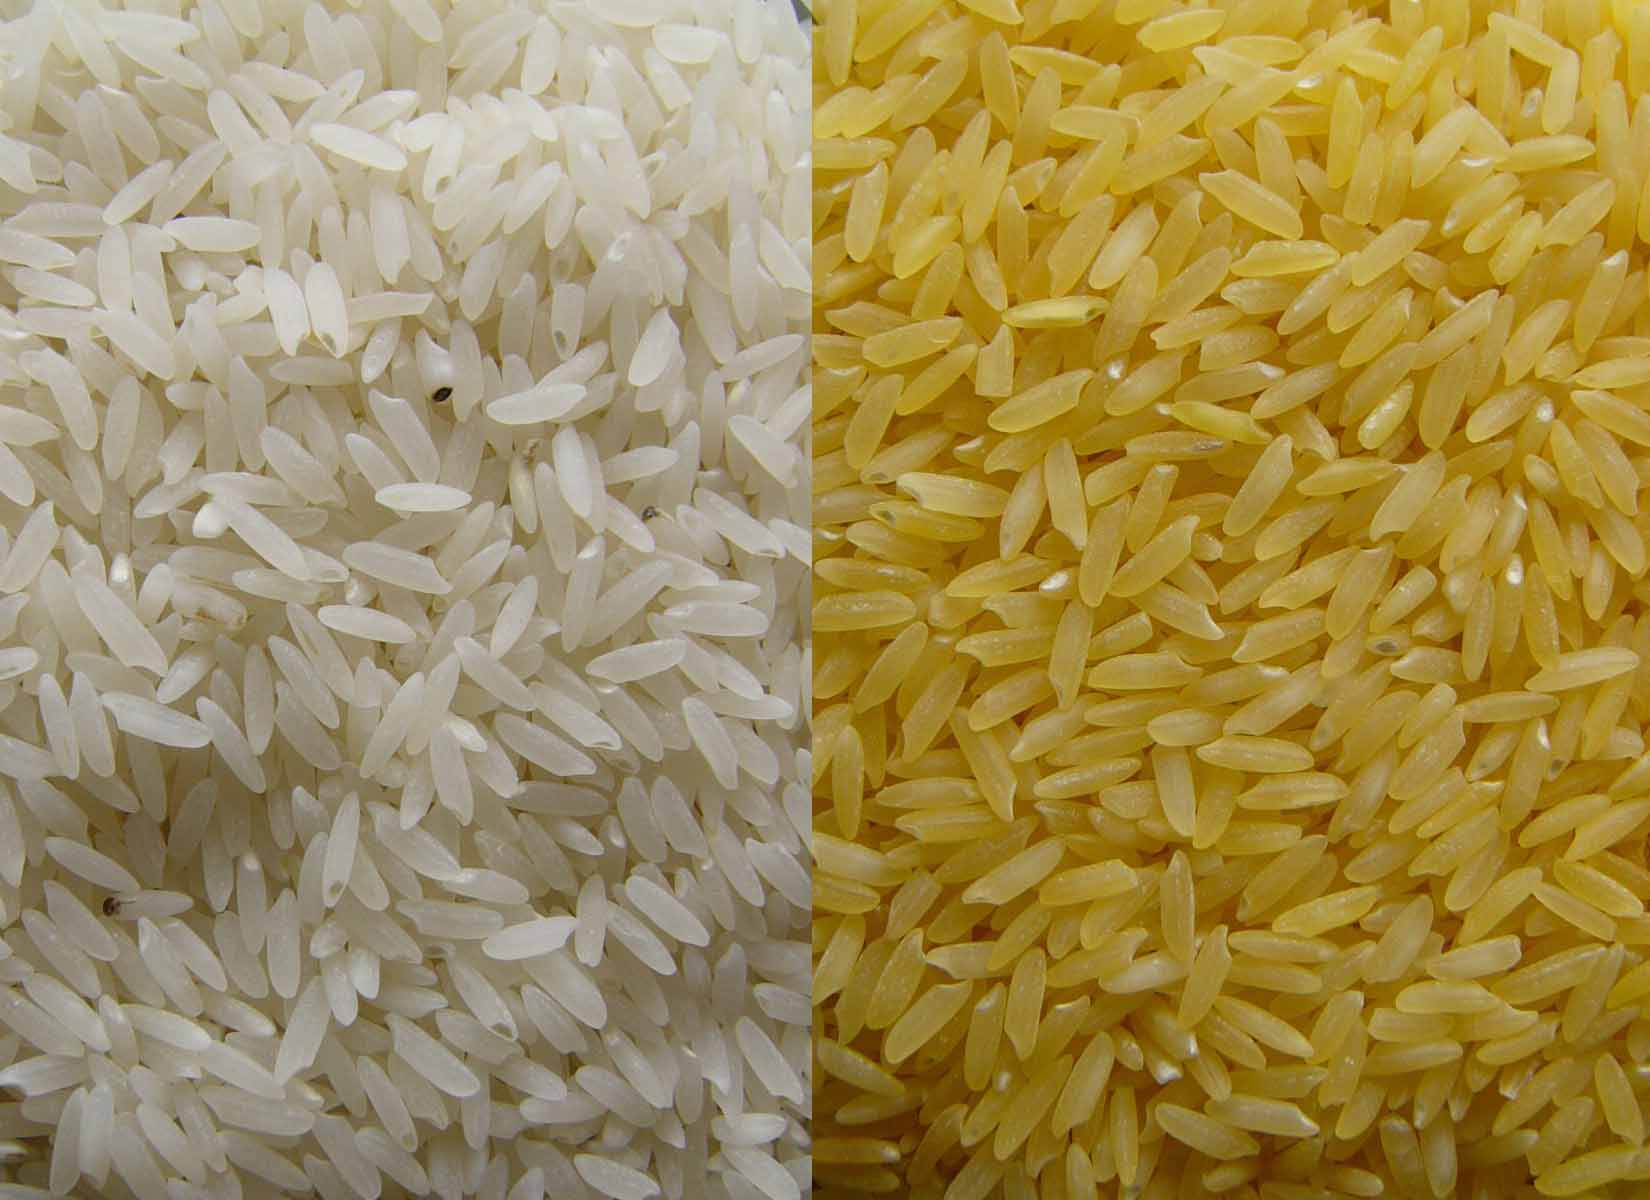 Which rice do you prefer?